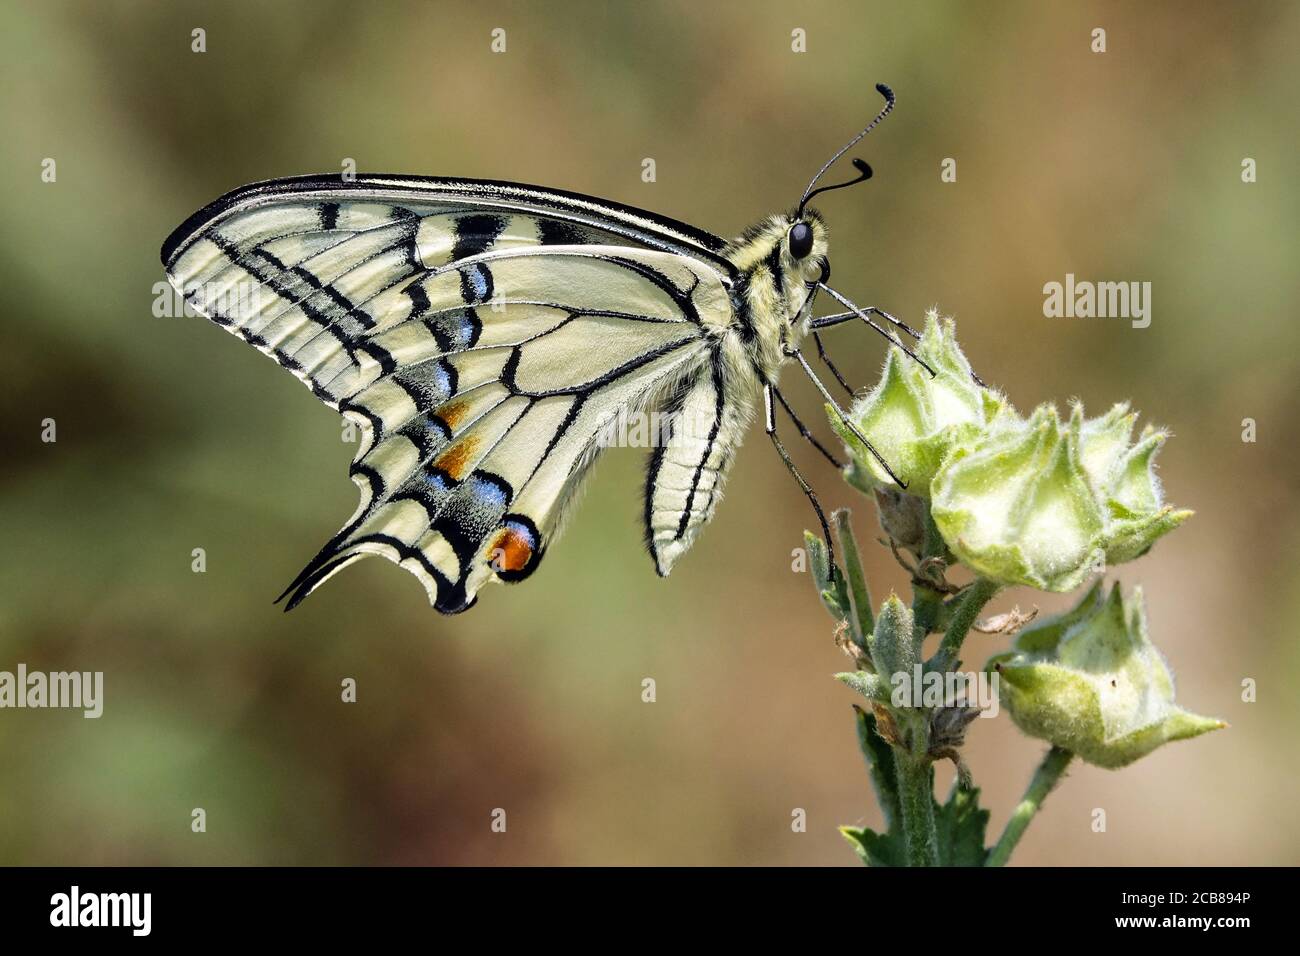 Papilio machaon butterfly Foto de stock